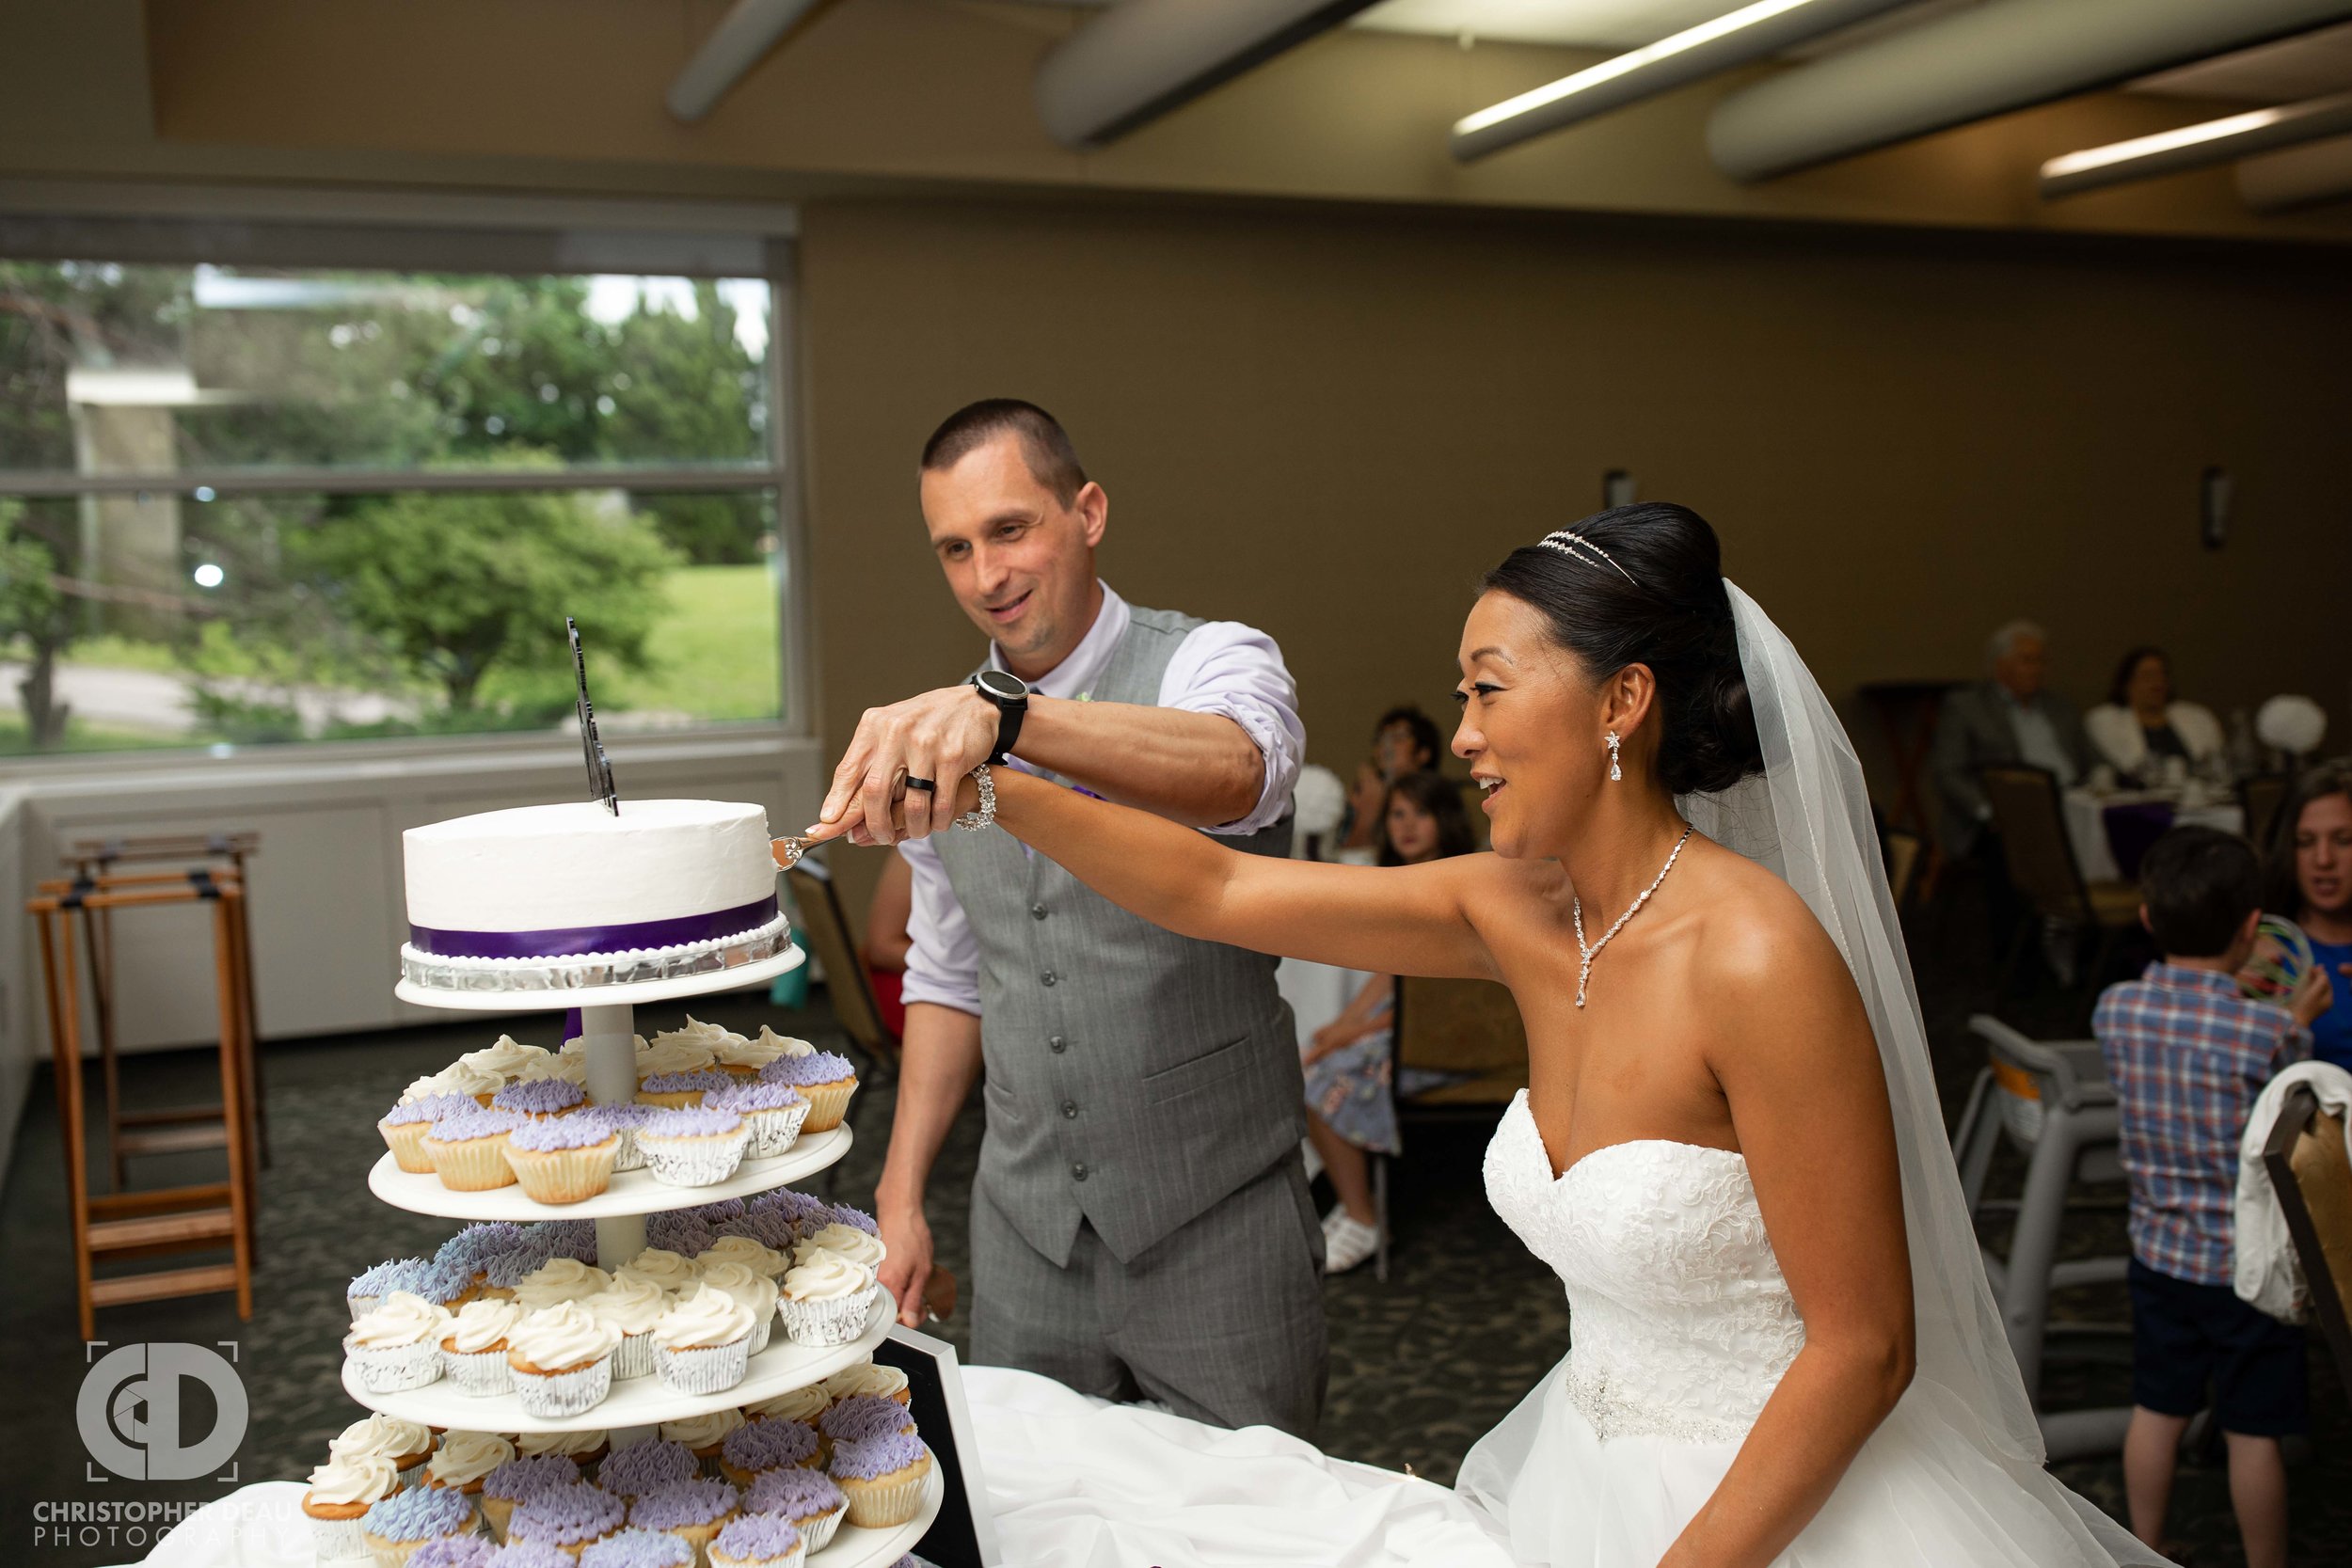  Wedding cake cutting at WMU Fetzer Center 